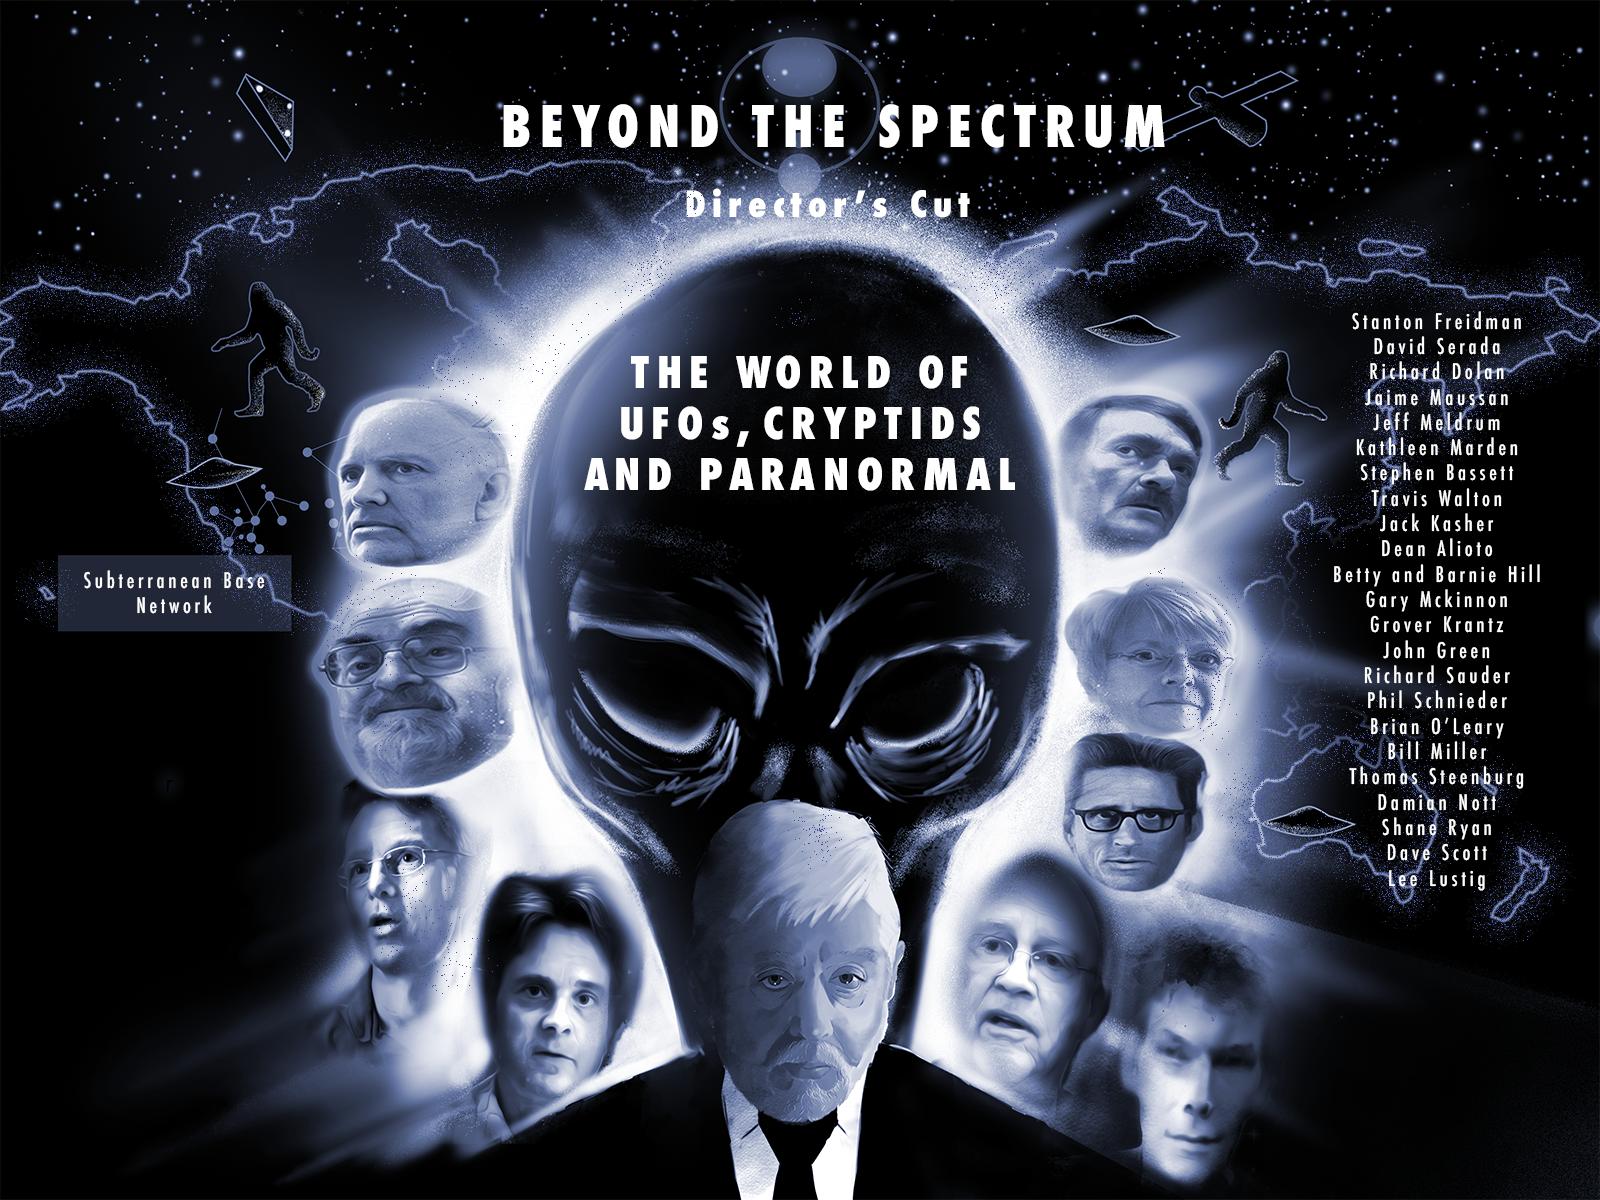 Beyond the Spectrum - Director's Cut